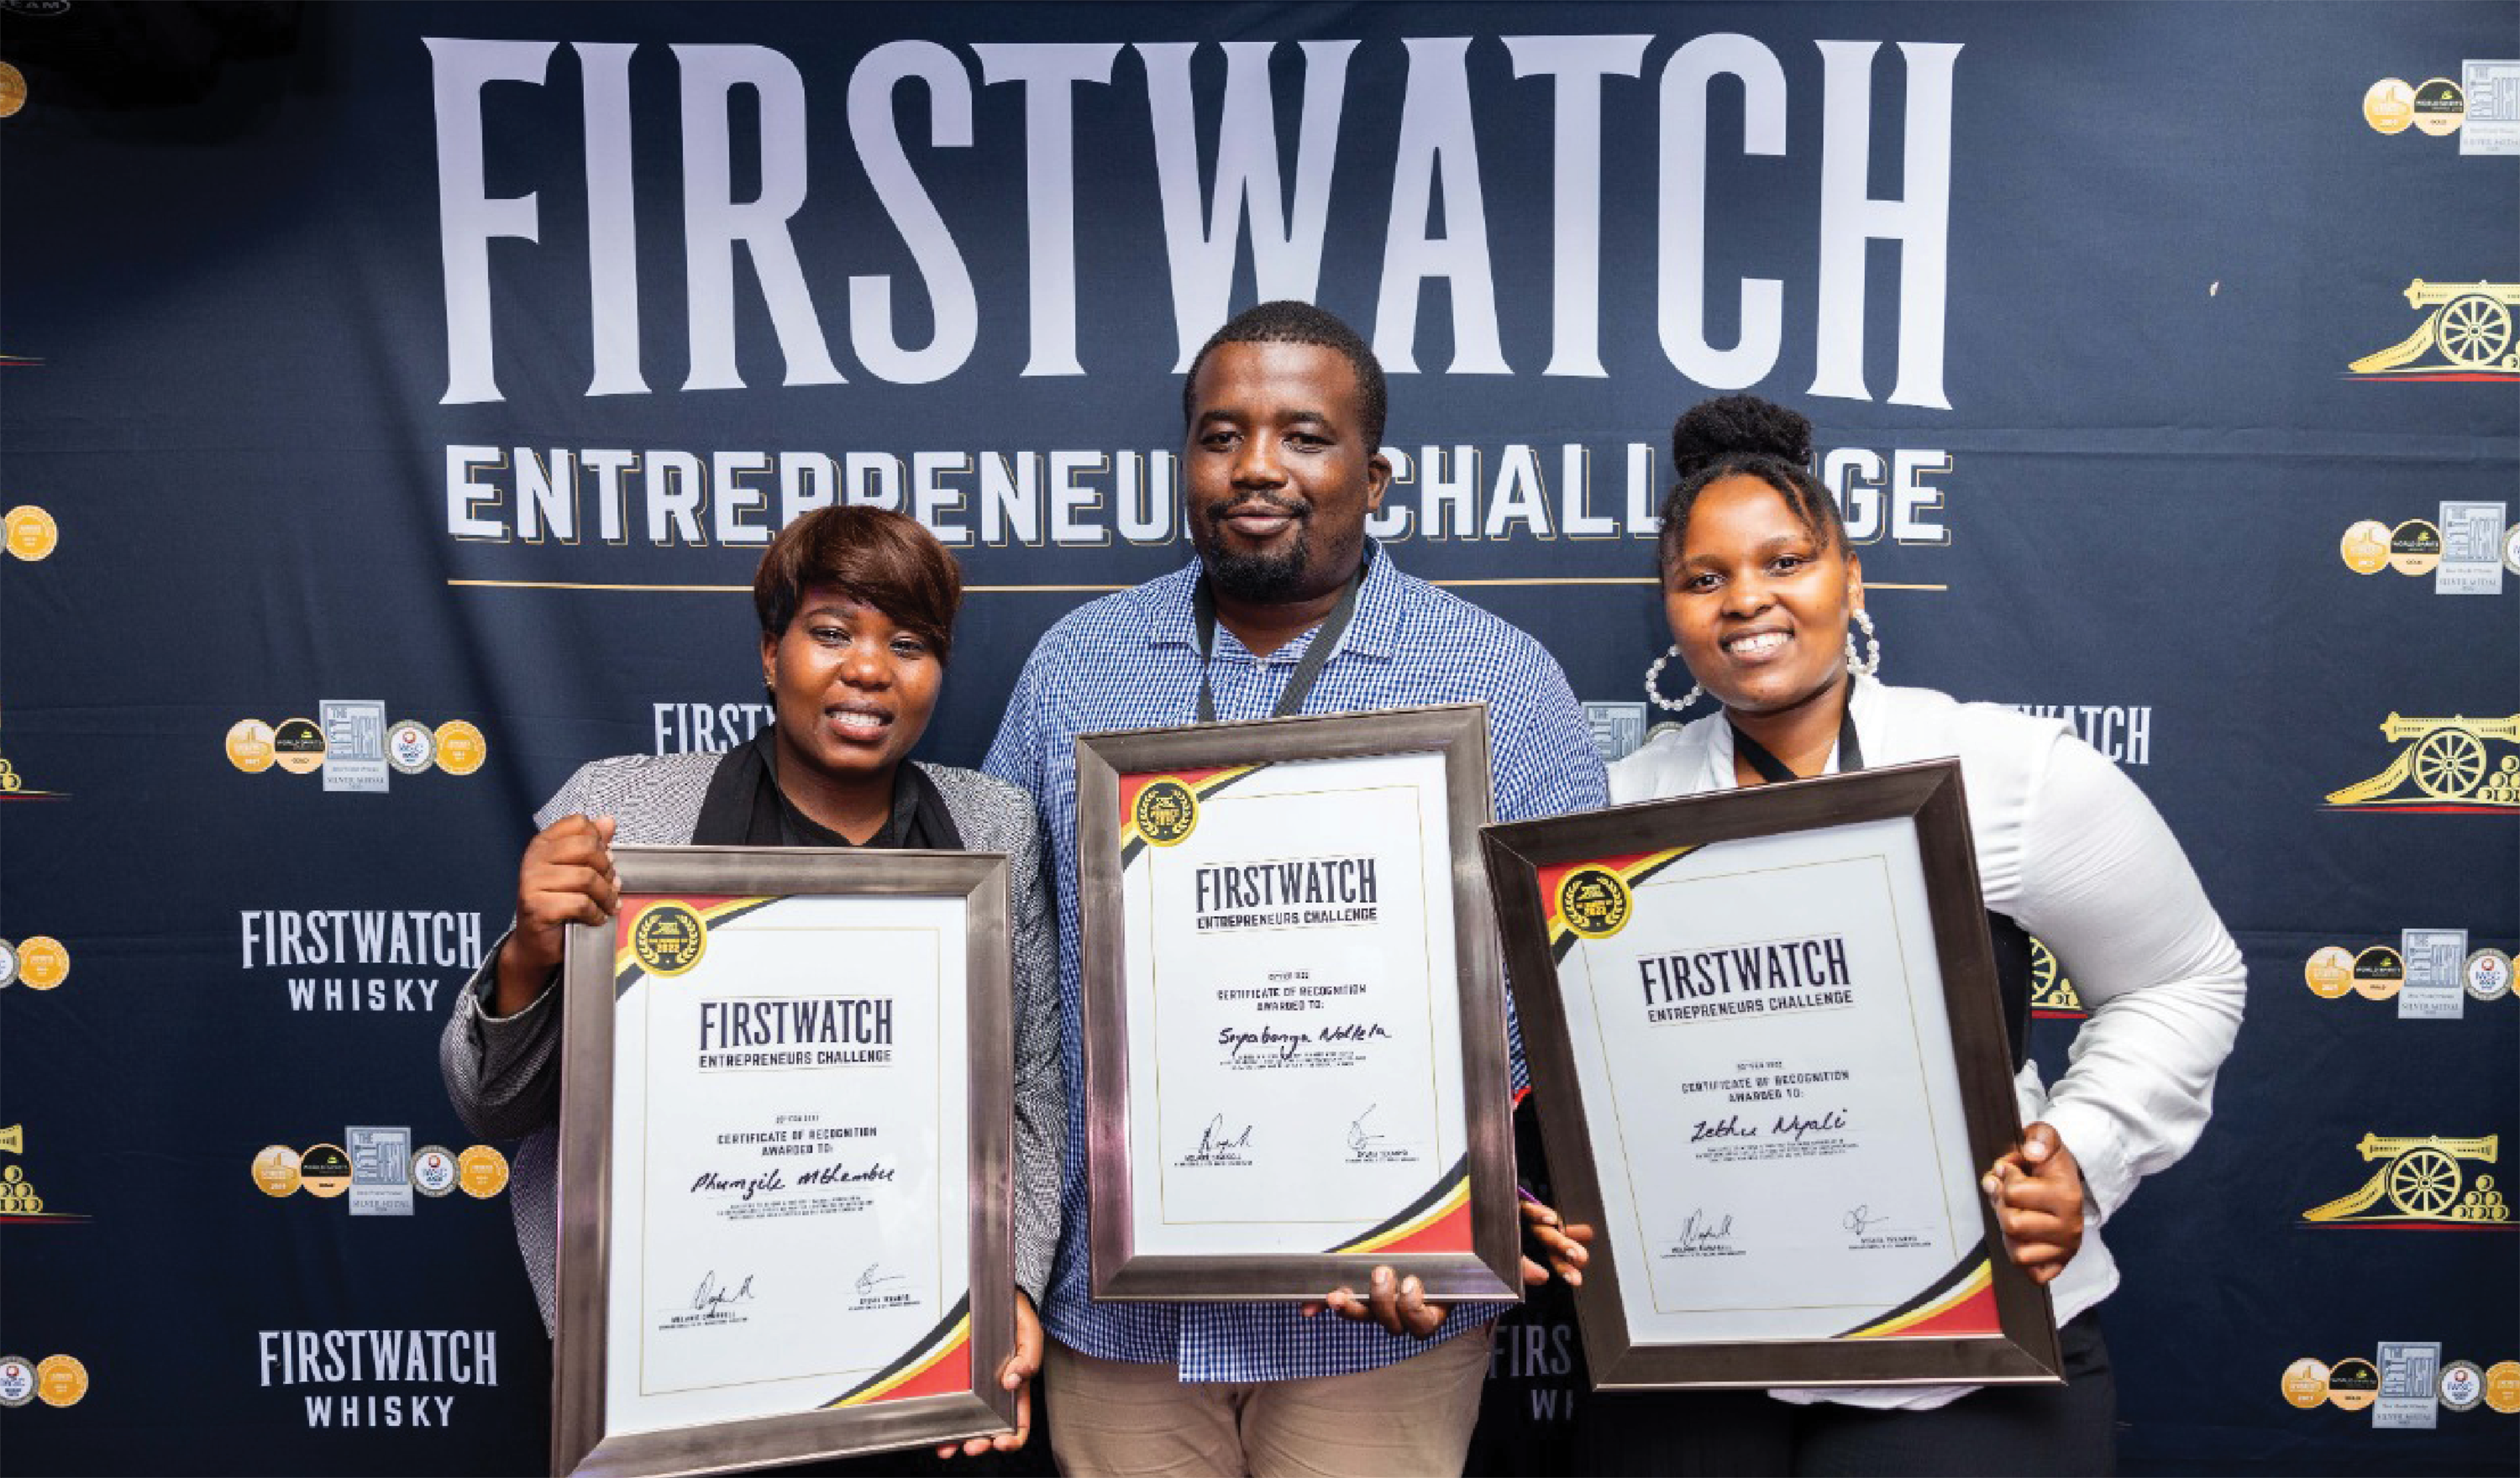 Edward Snell | Siyabonga Ndlela wins the 2022 Firstwatch Whisky, Entrepreneurs Challenge